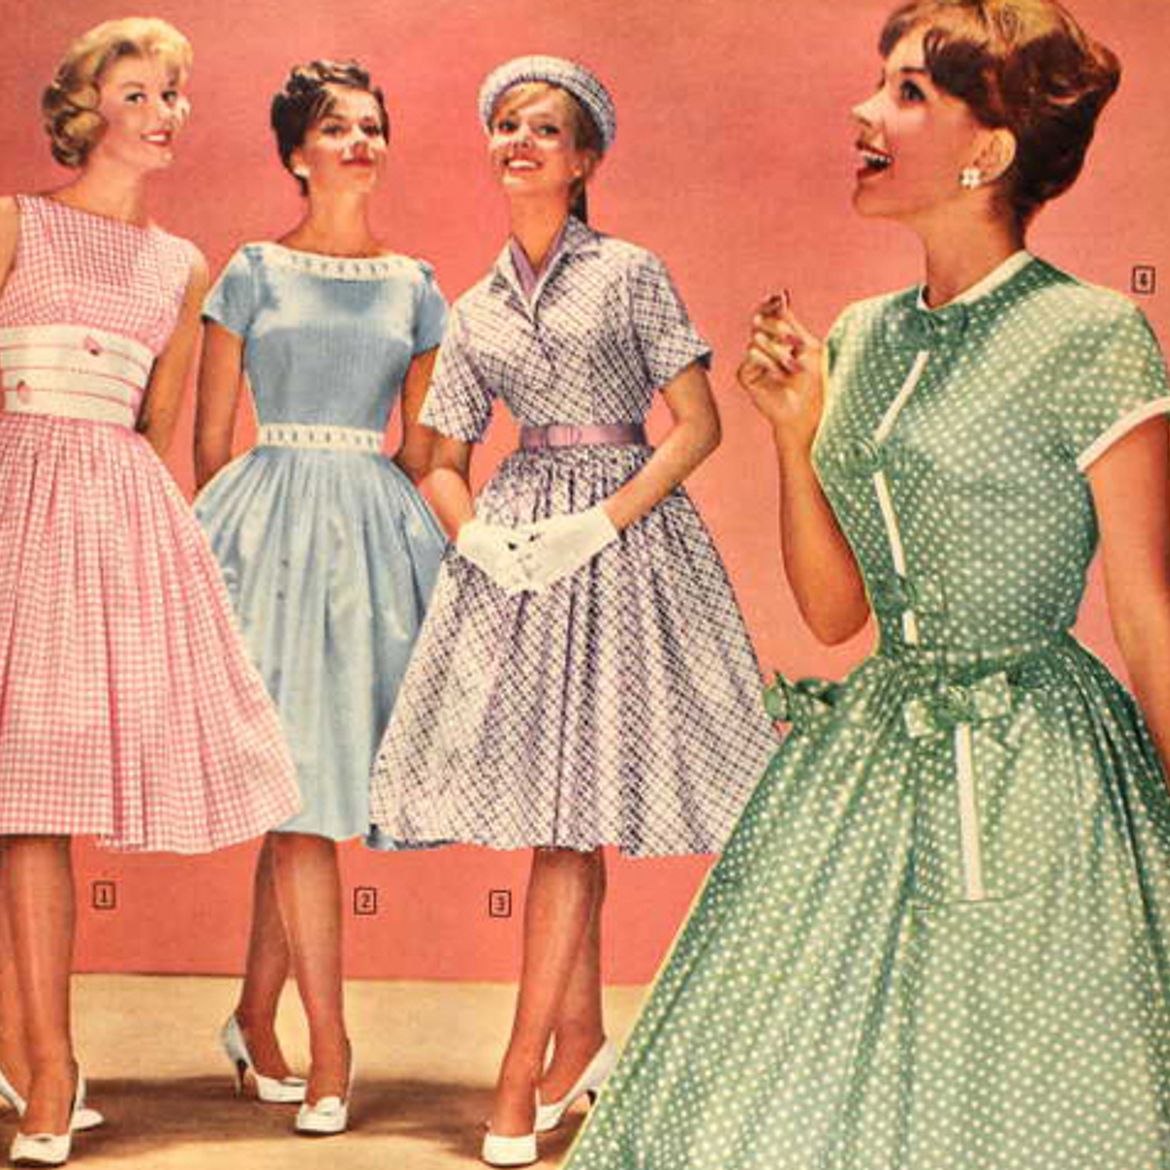 1950's housewife dress